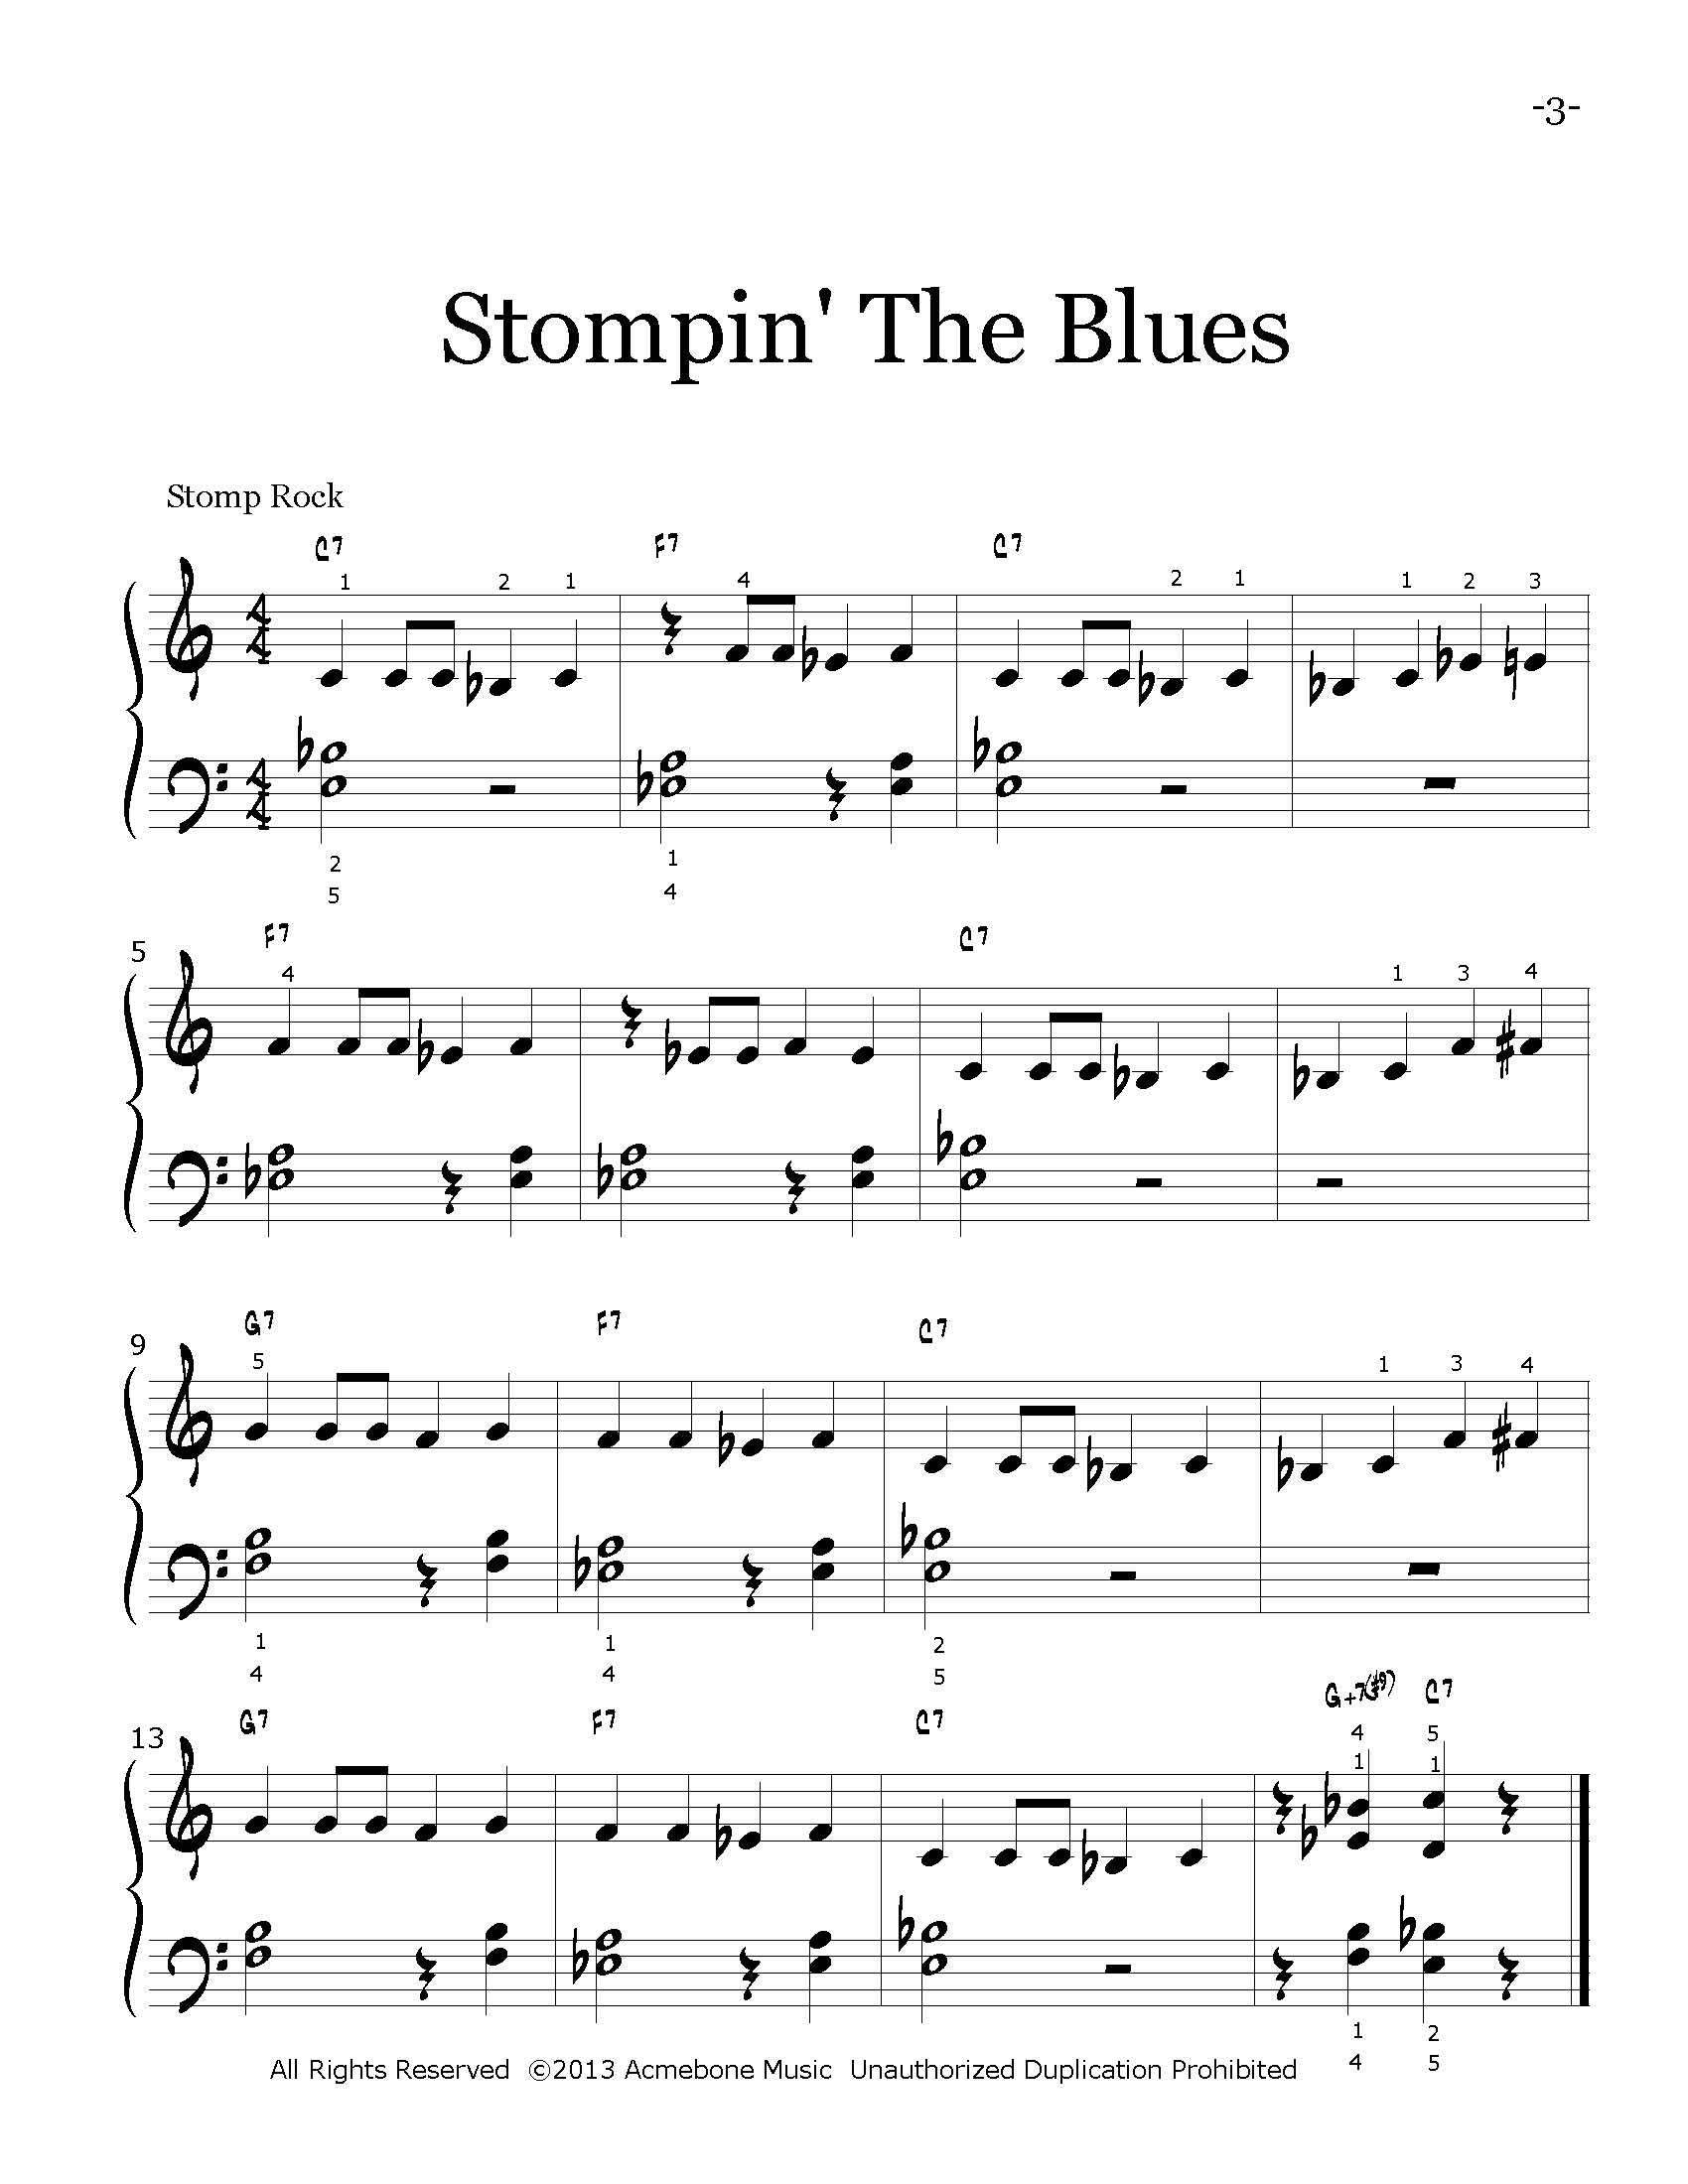 Stompin' The Blues